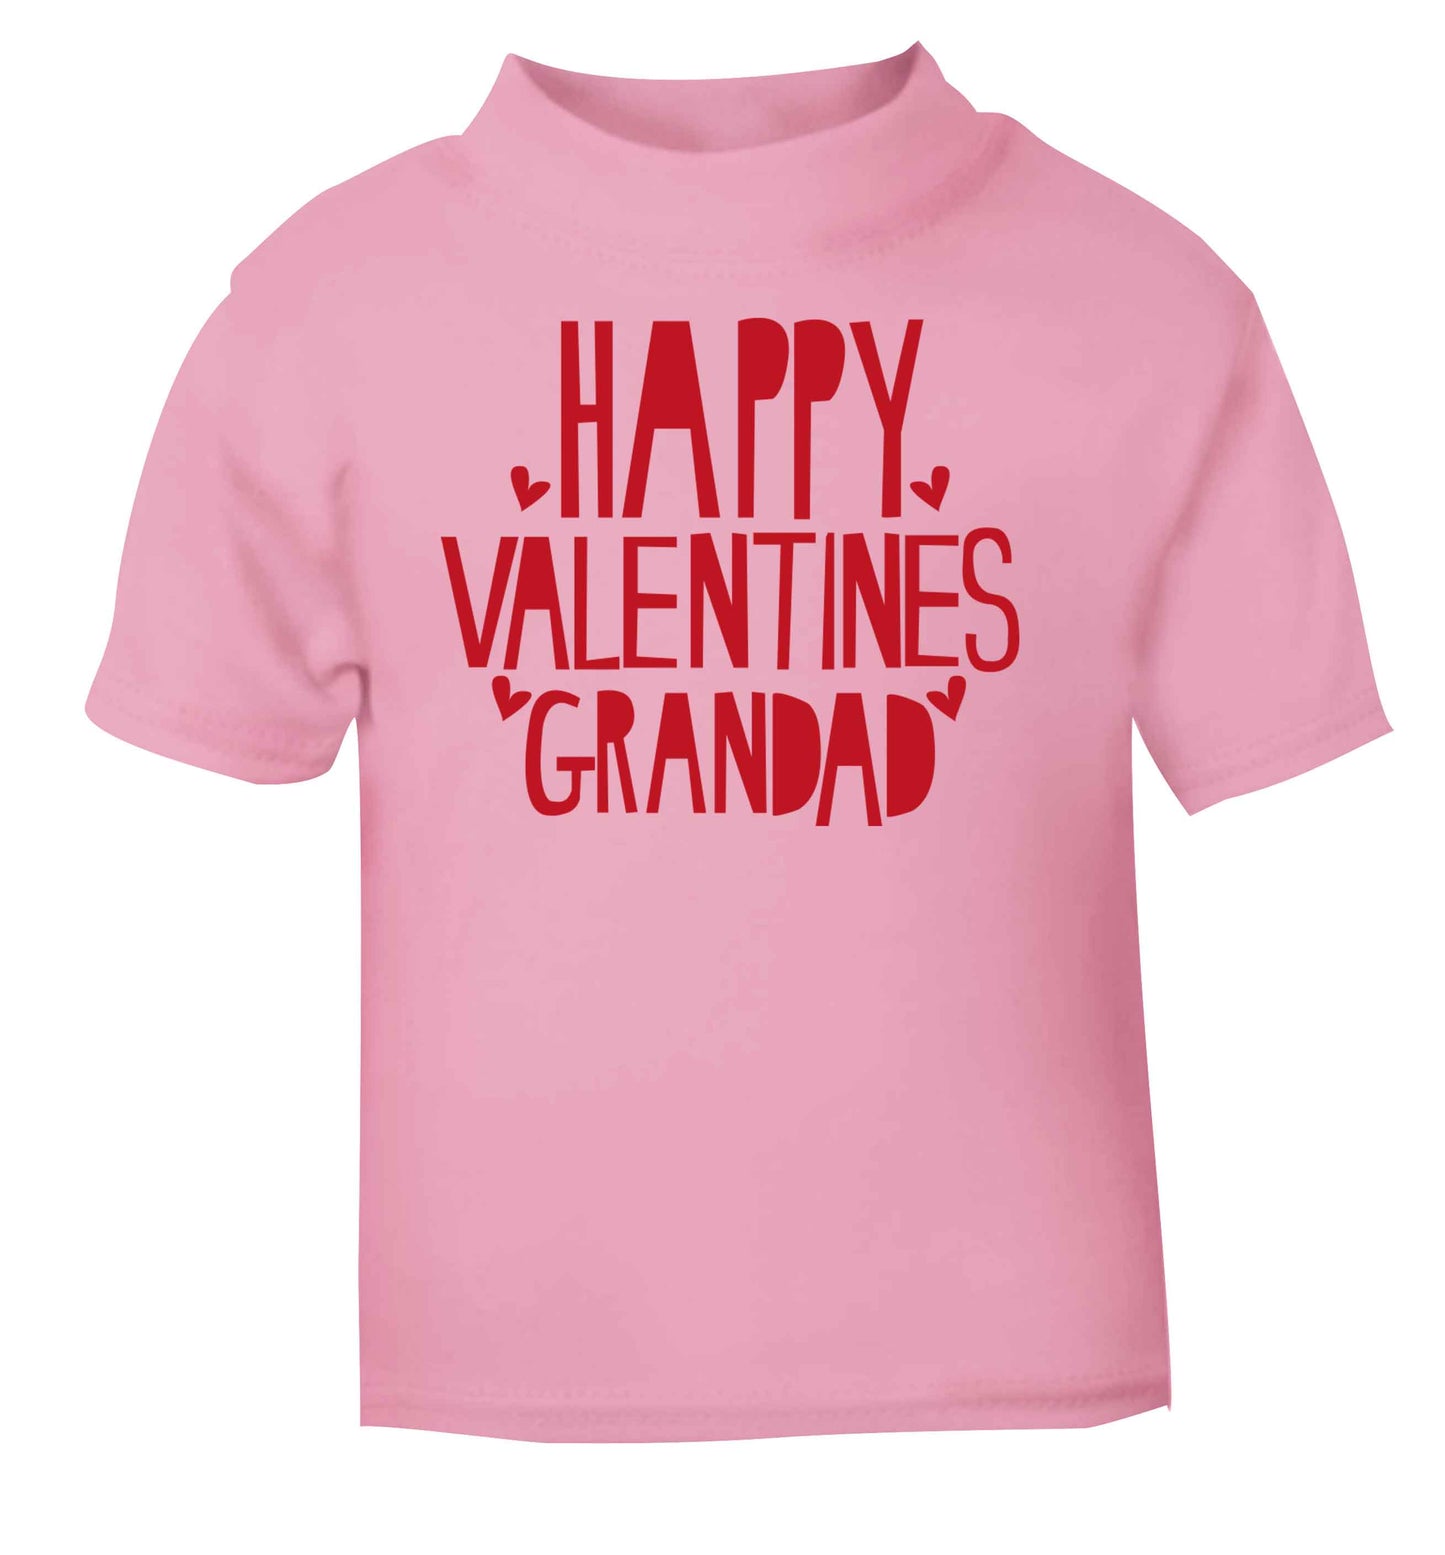 Happy valentines grandad light pink baby toddler Tshirt 2 Years